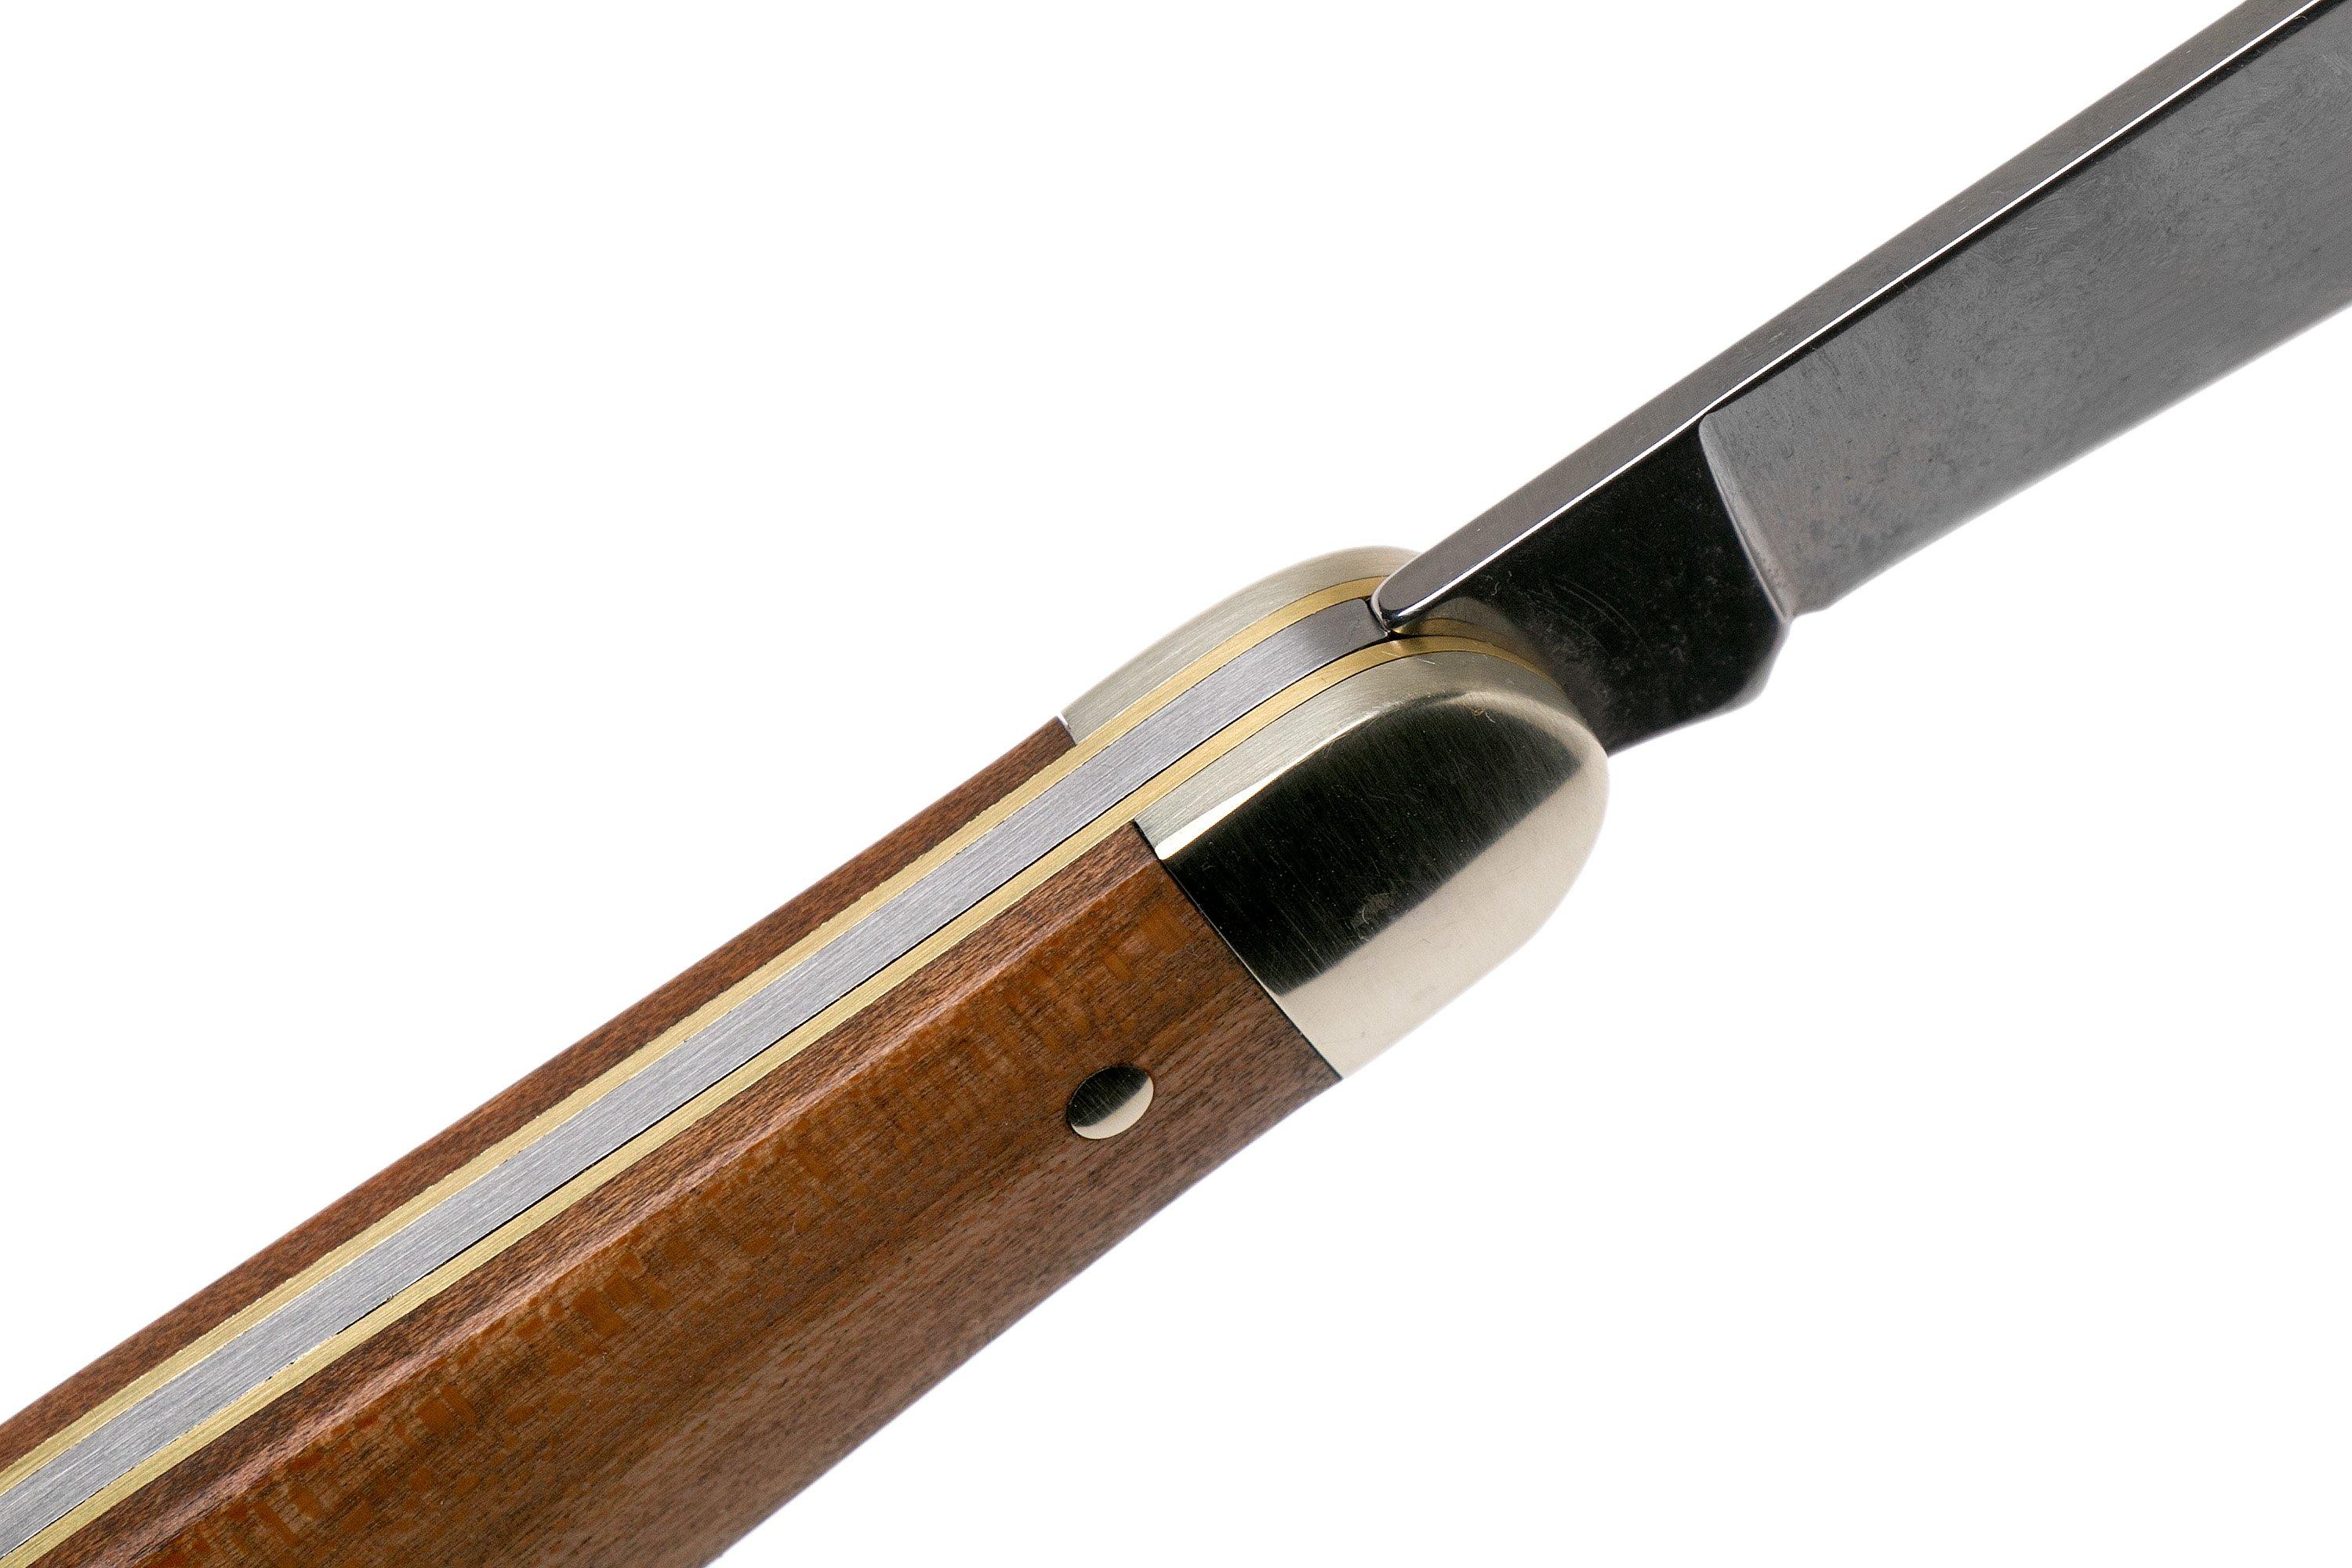 Böker Stockman Bog Oak 117482 pocket knife  Advantageously shopping at